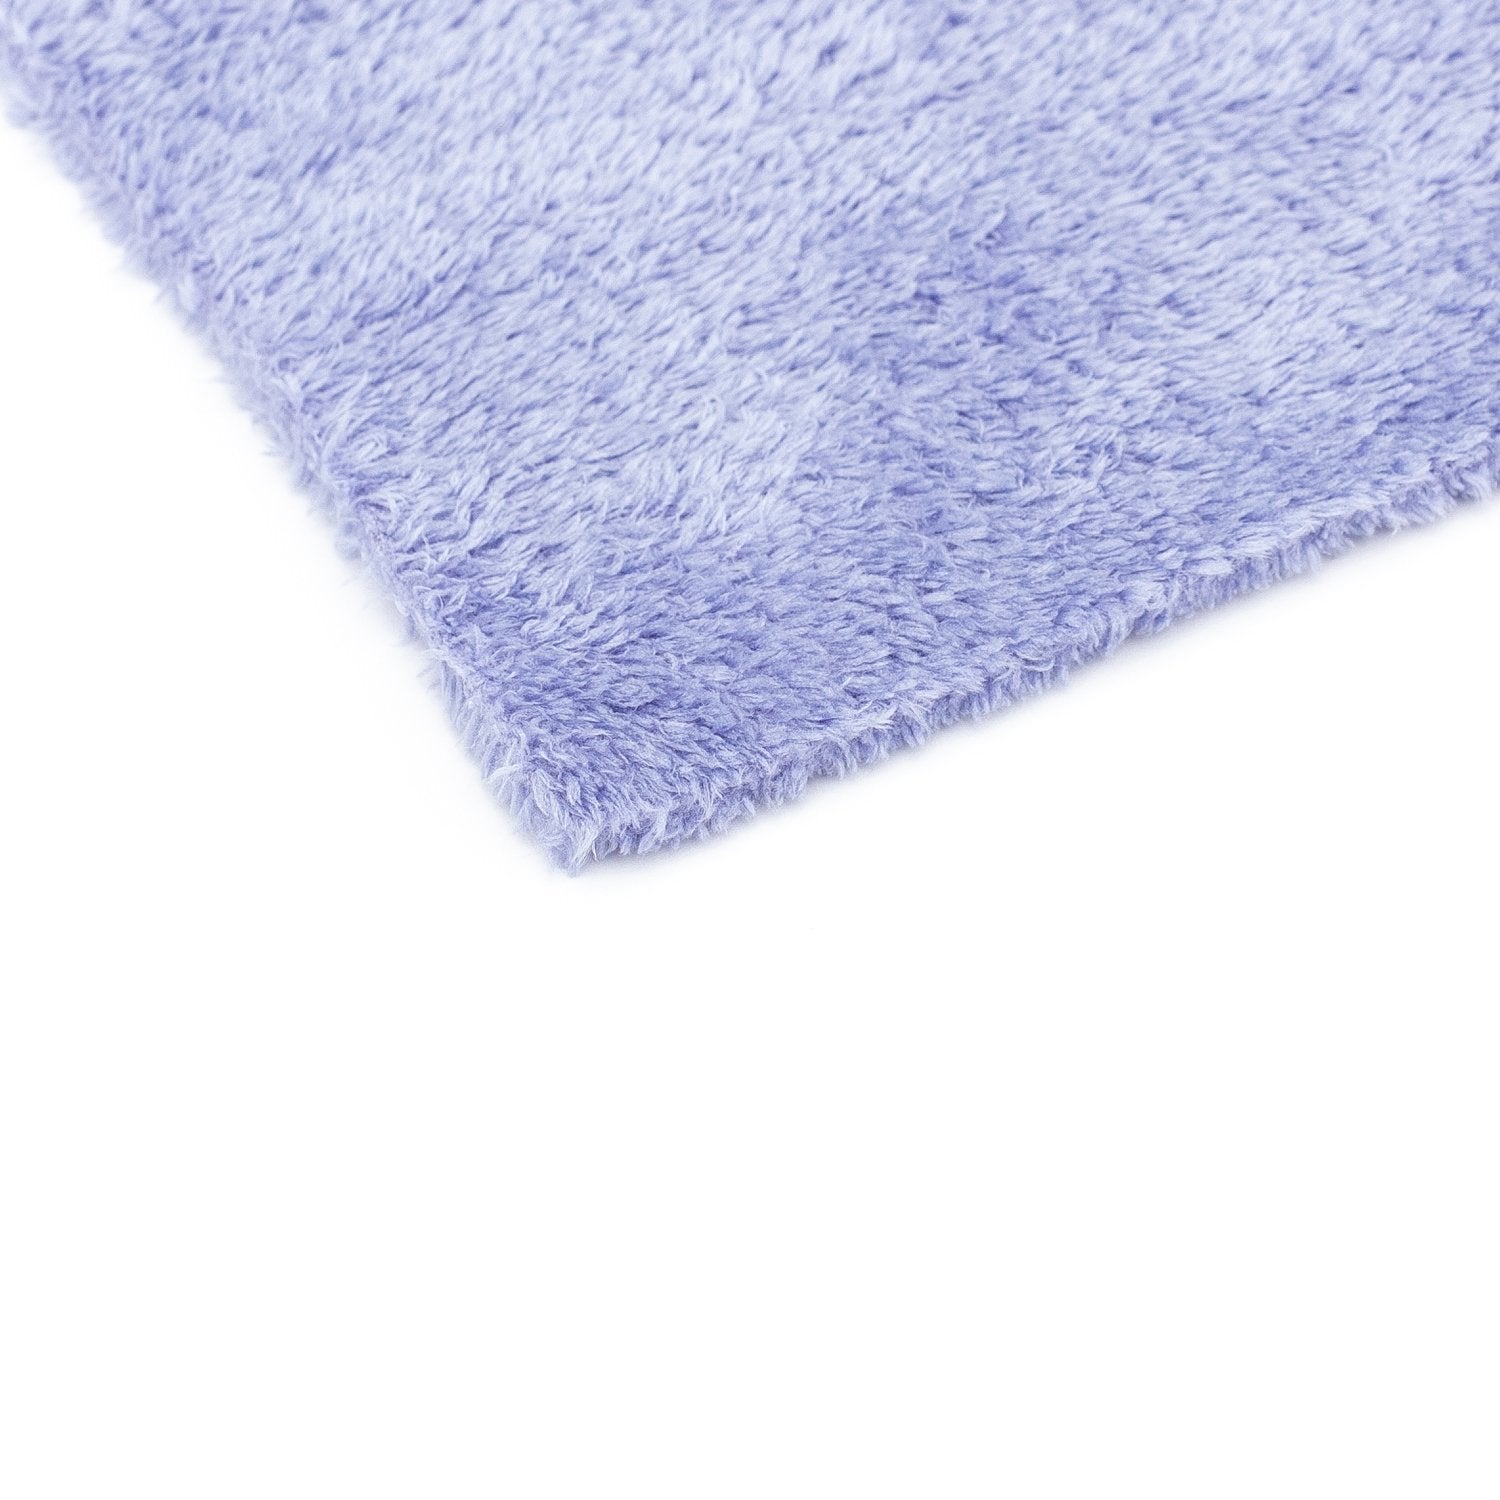 Thick Edgeless Microfiber Towel, Gray – Level Finish